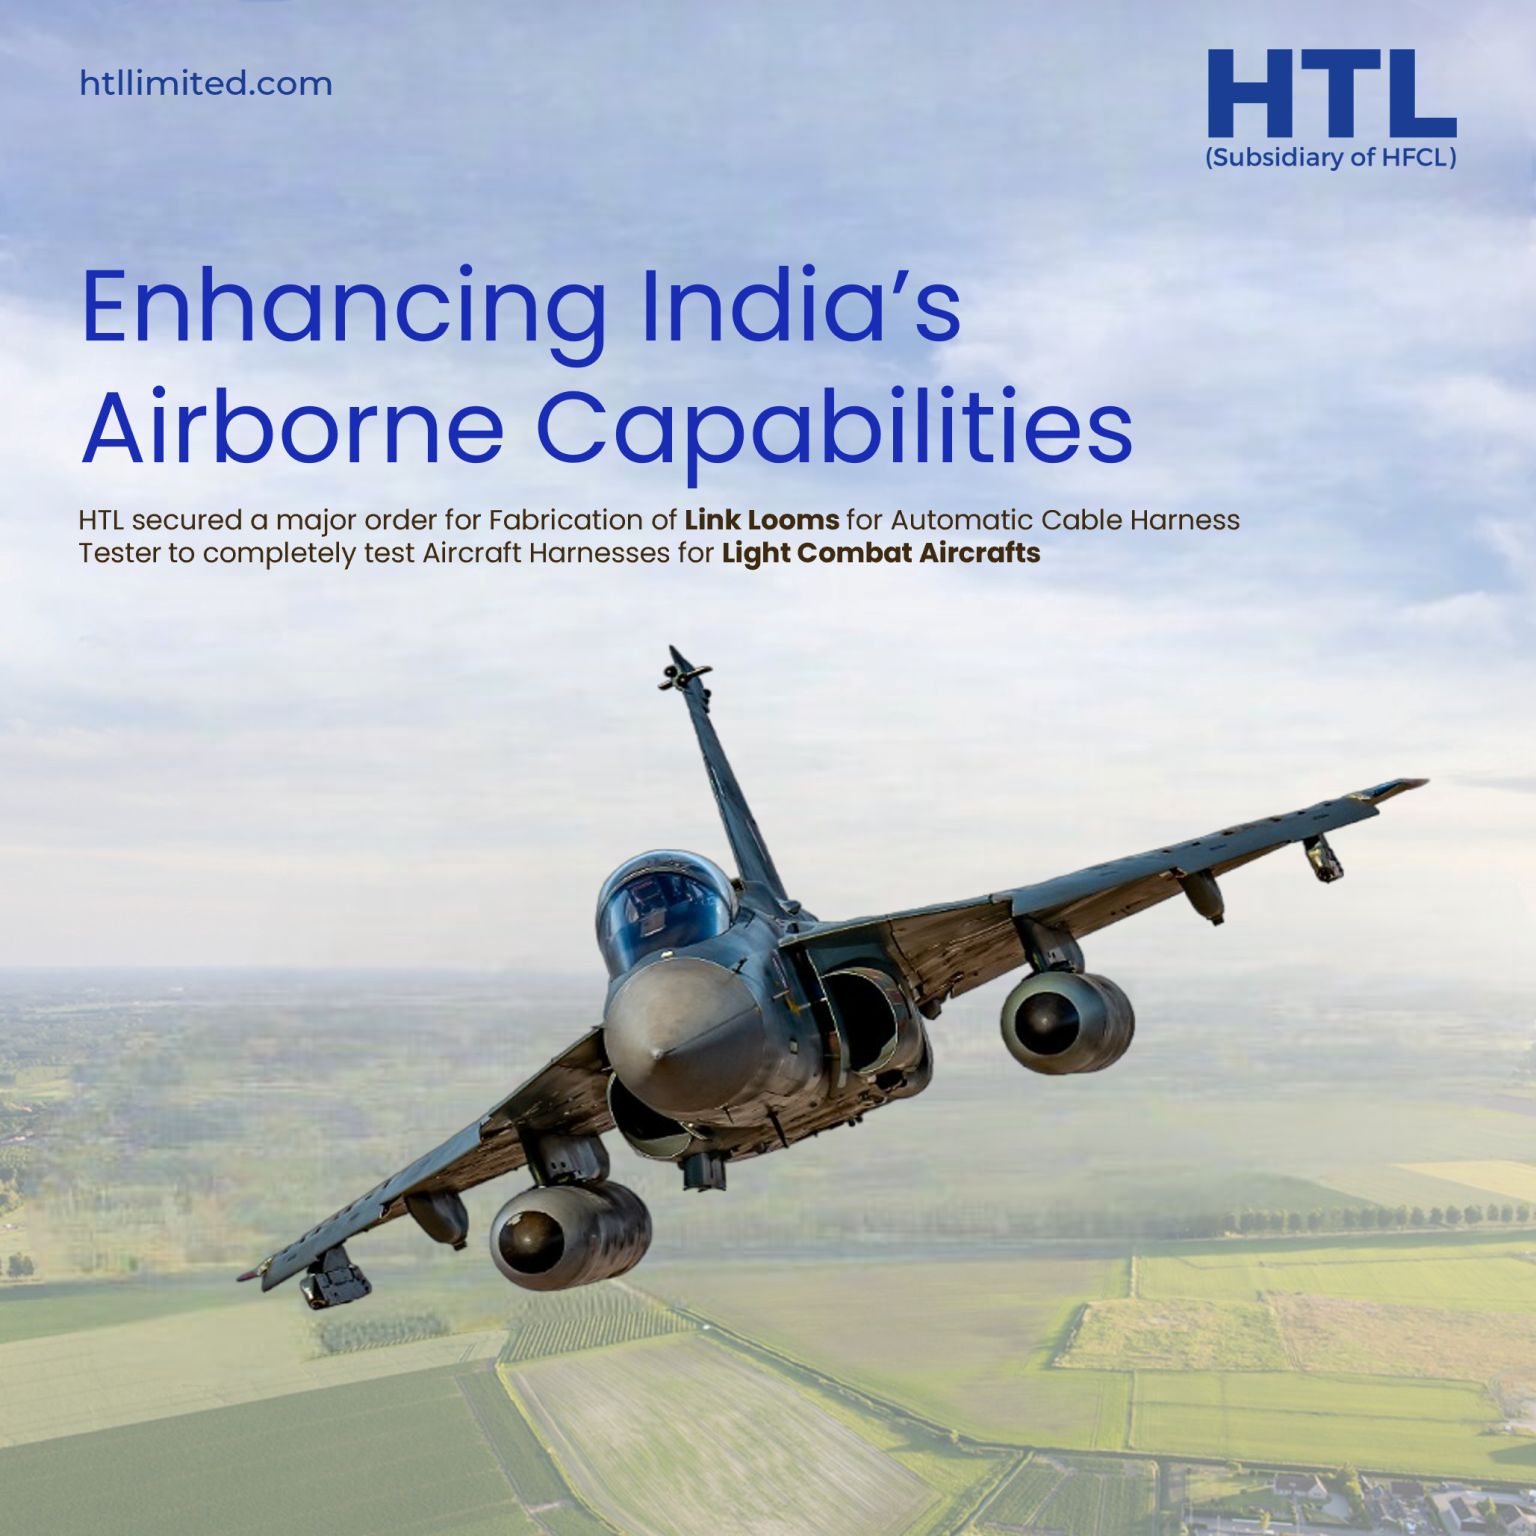 HTL: Enhancing India's Airborne Capabilities!